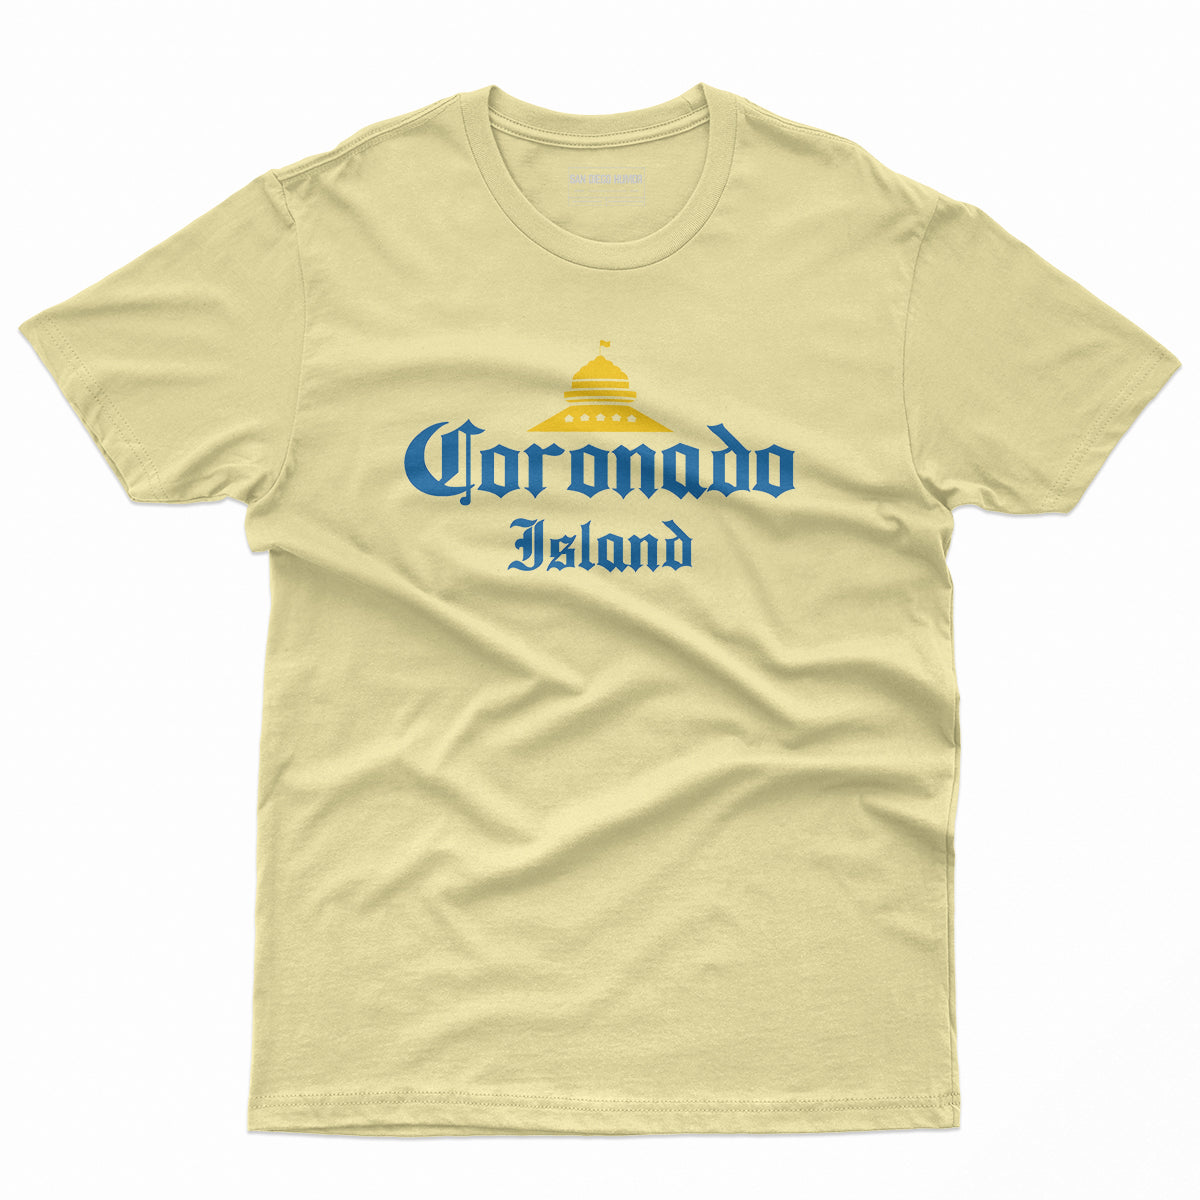 Coronado Island T-Shirt - Unisex